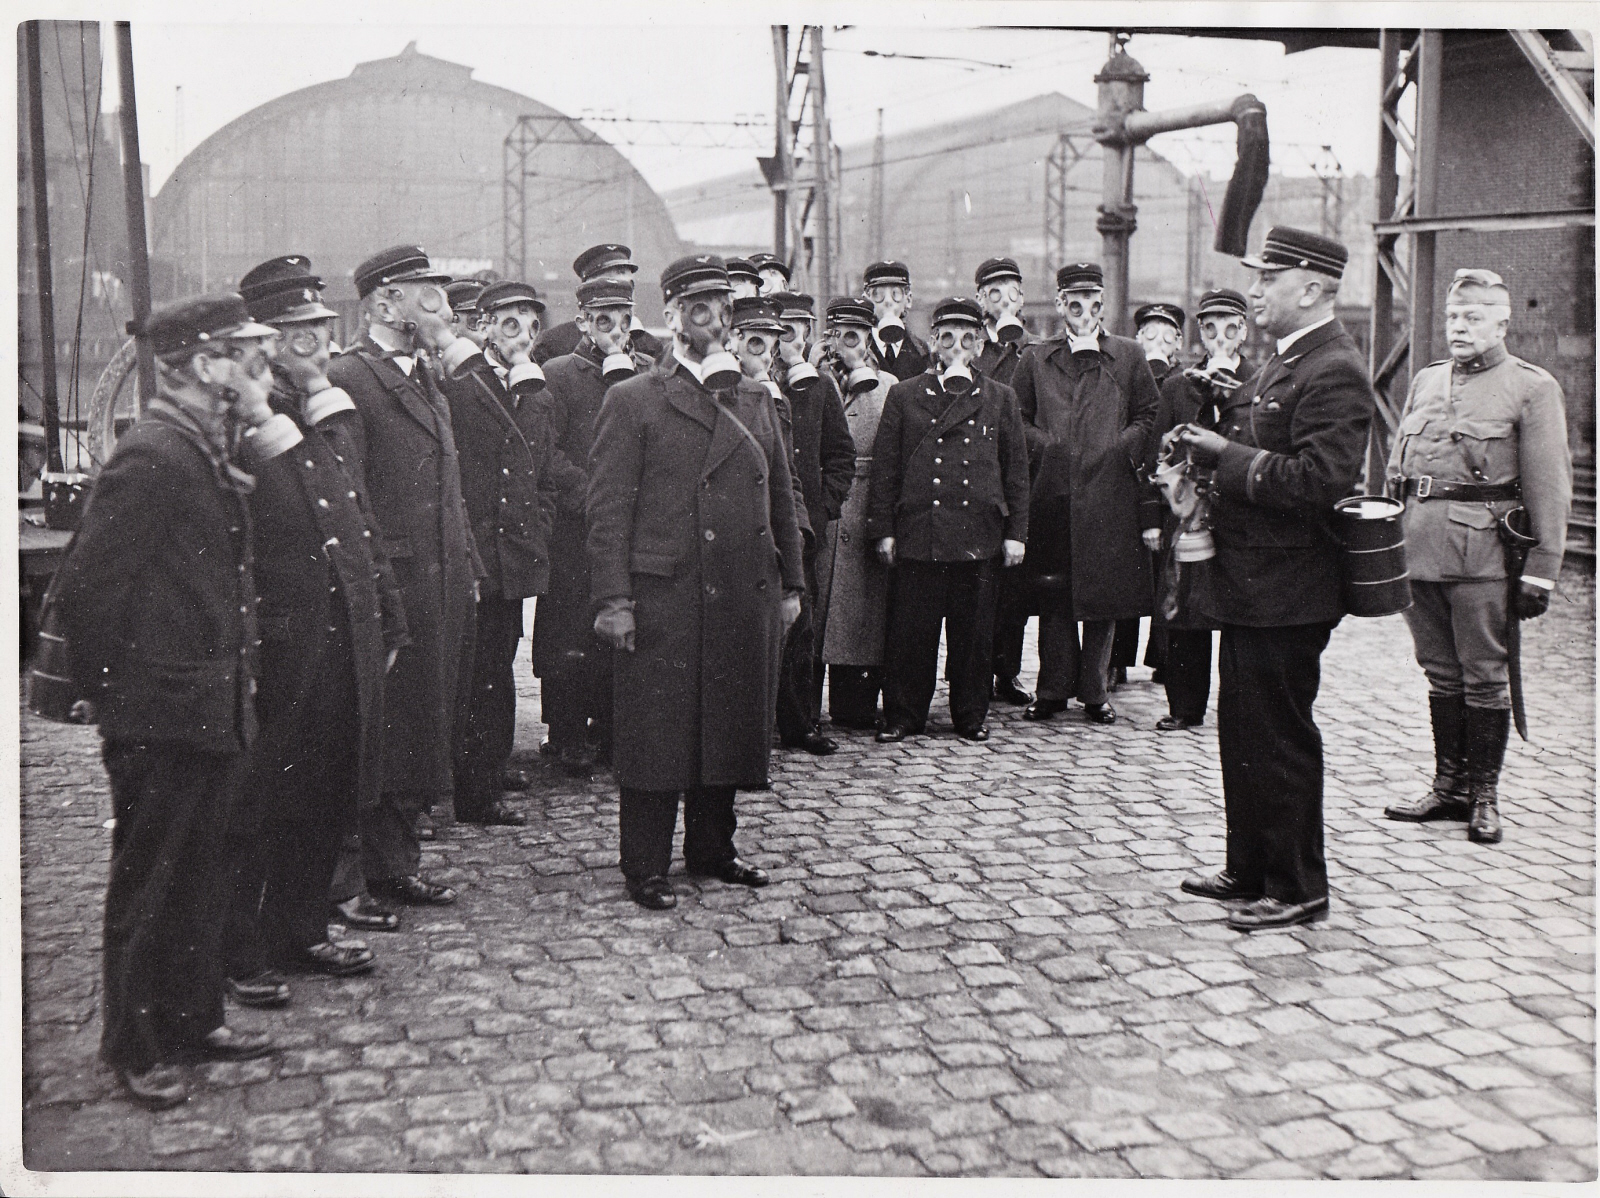 Oefening met gasmaskers door personeel op Amsterdam CS in 1939